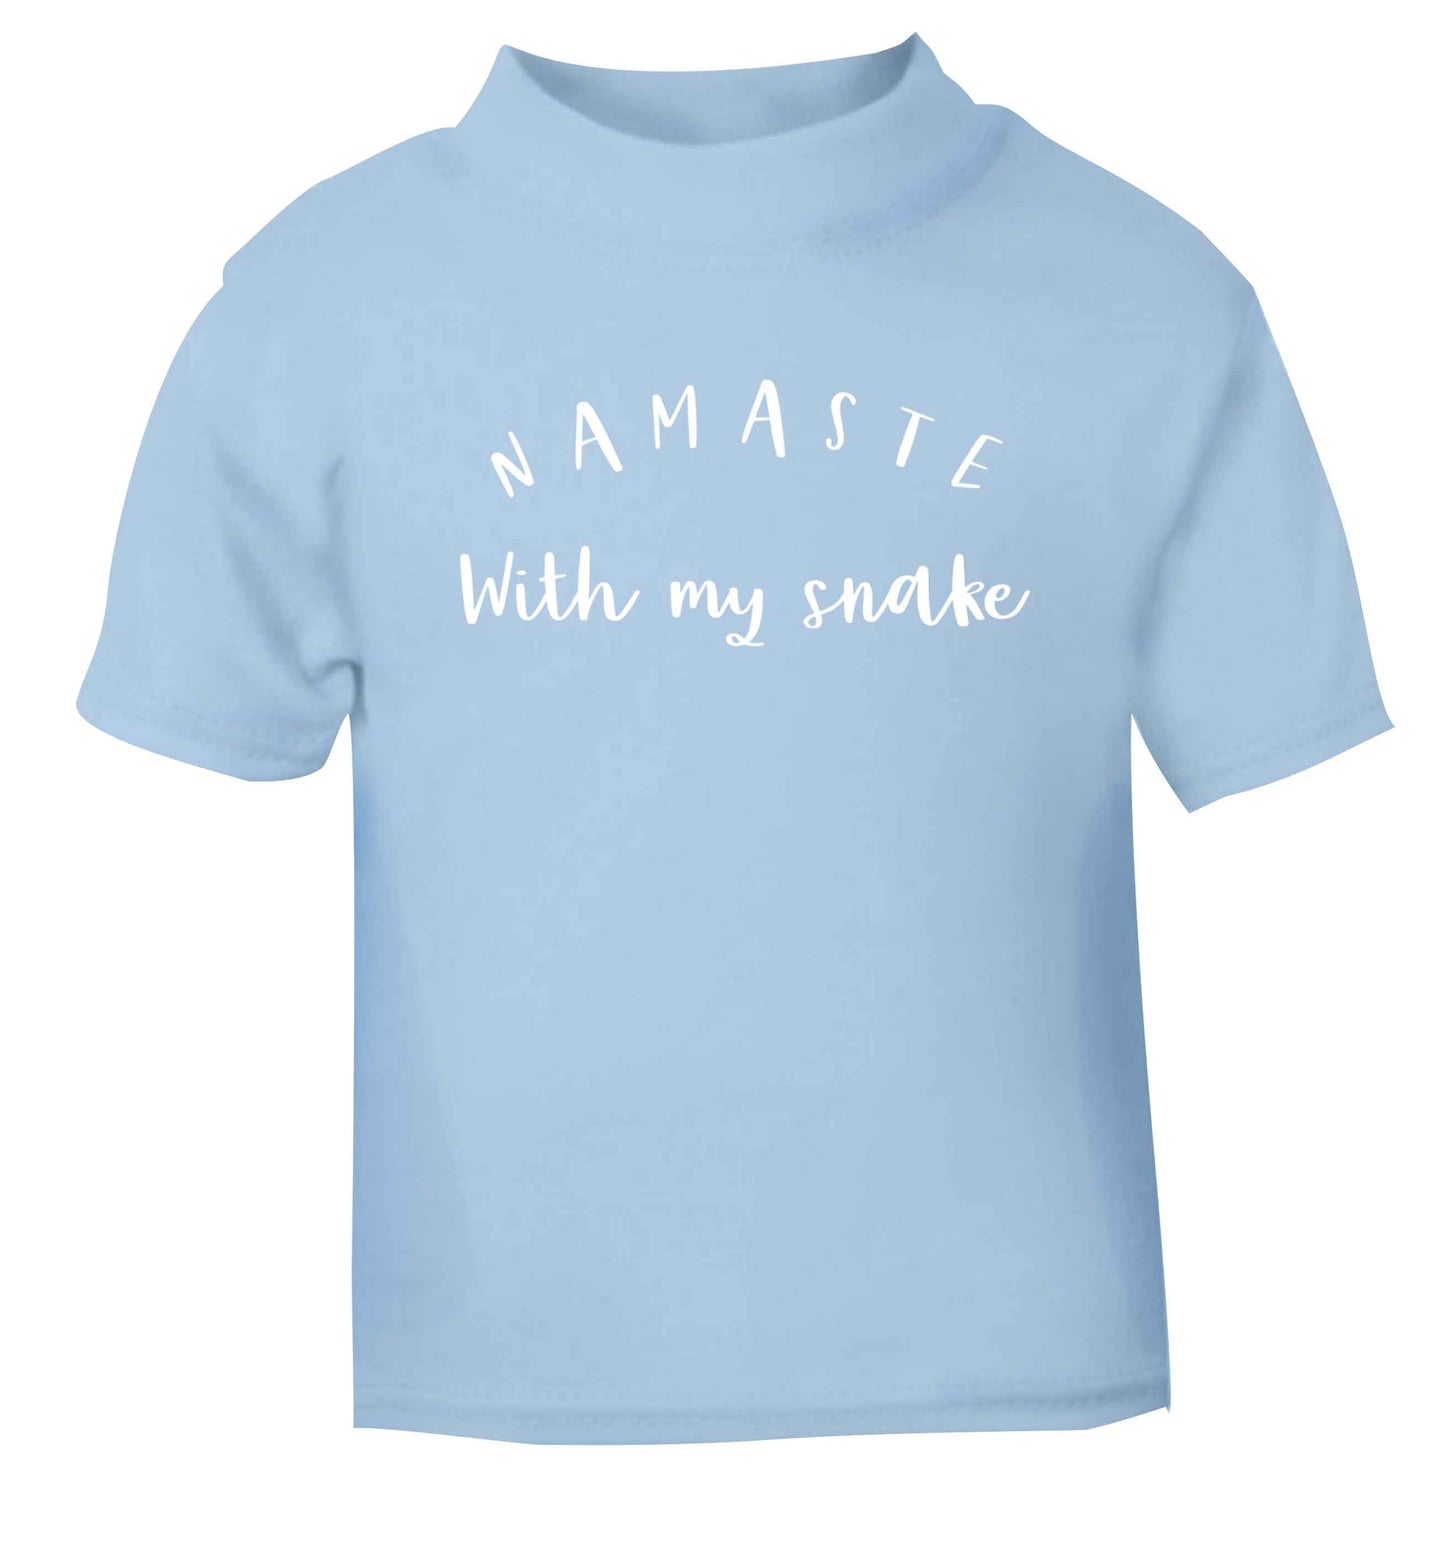 Namaste with my snake light blue Baby Toddler Tshirt 2 Years